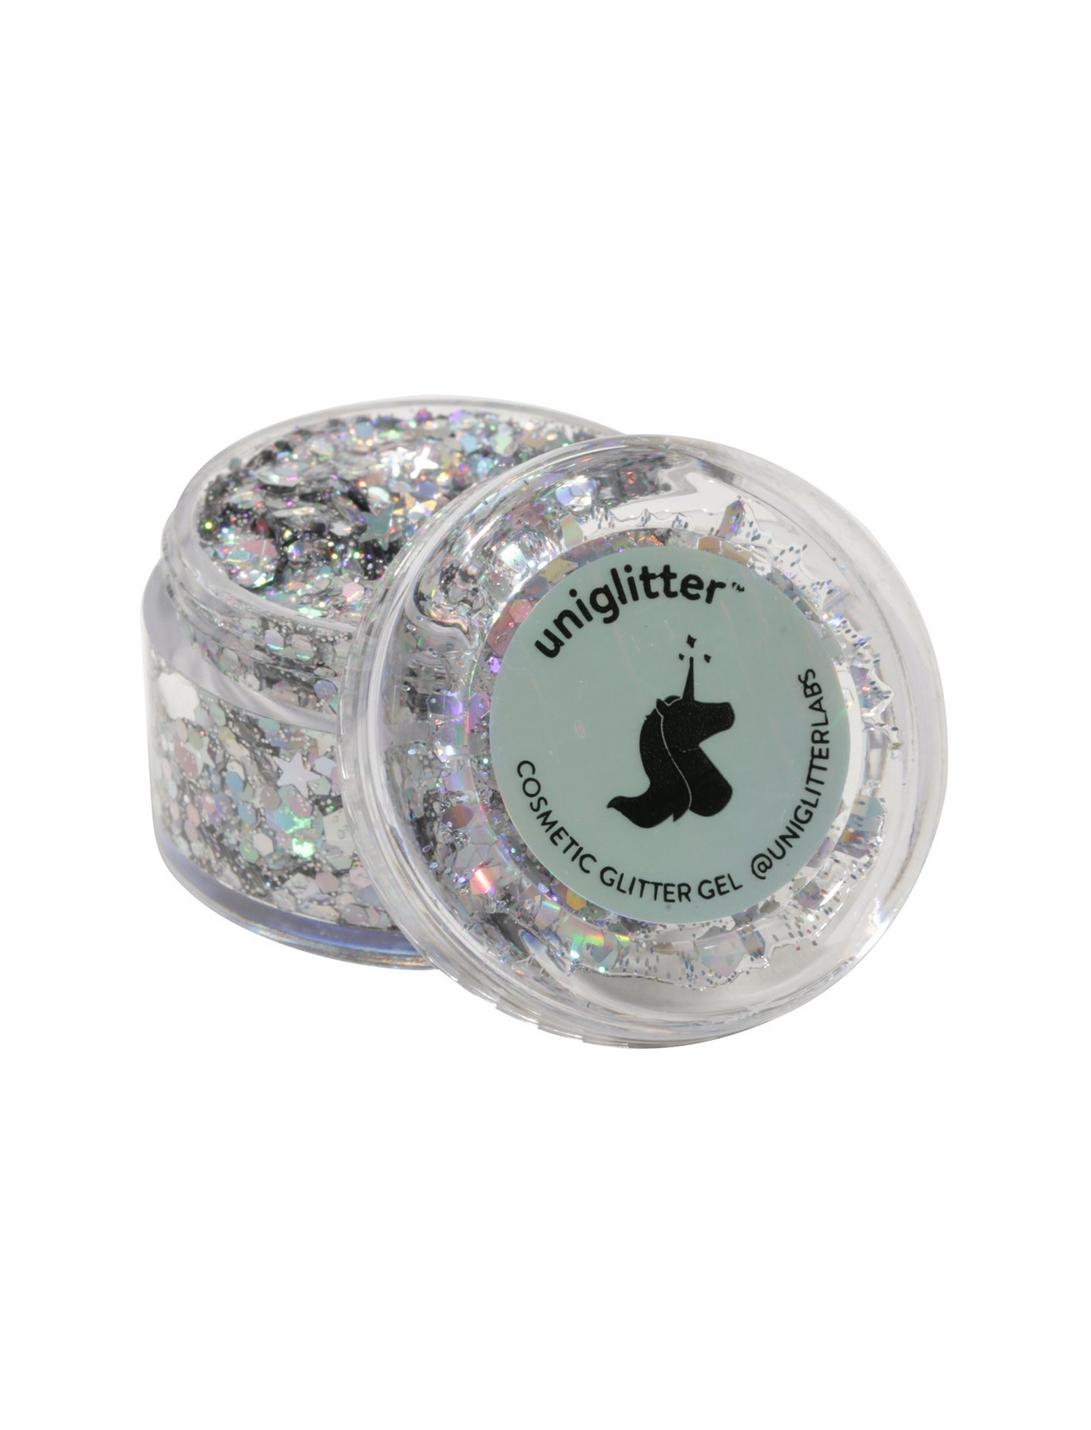 Uniglitter Silver Glitter Pot, , hi-res